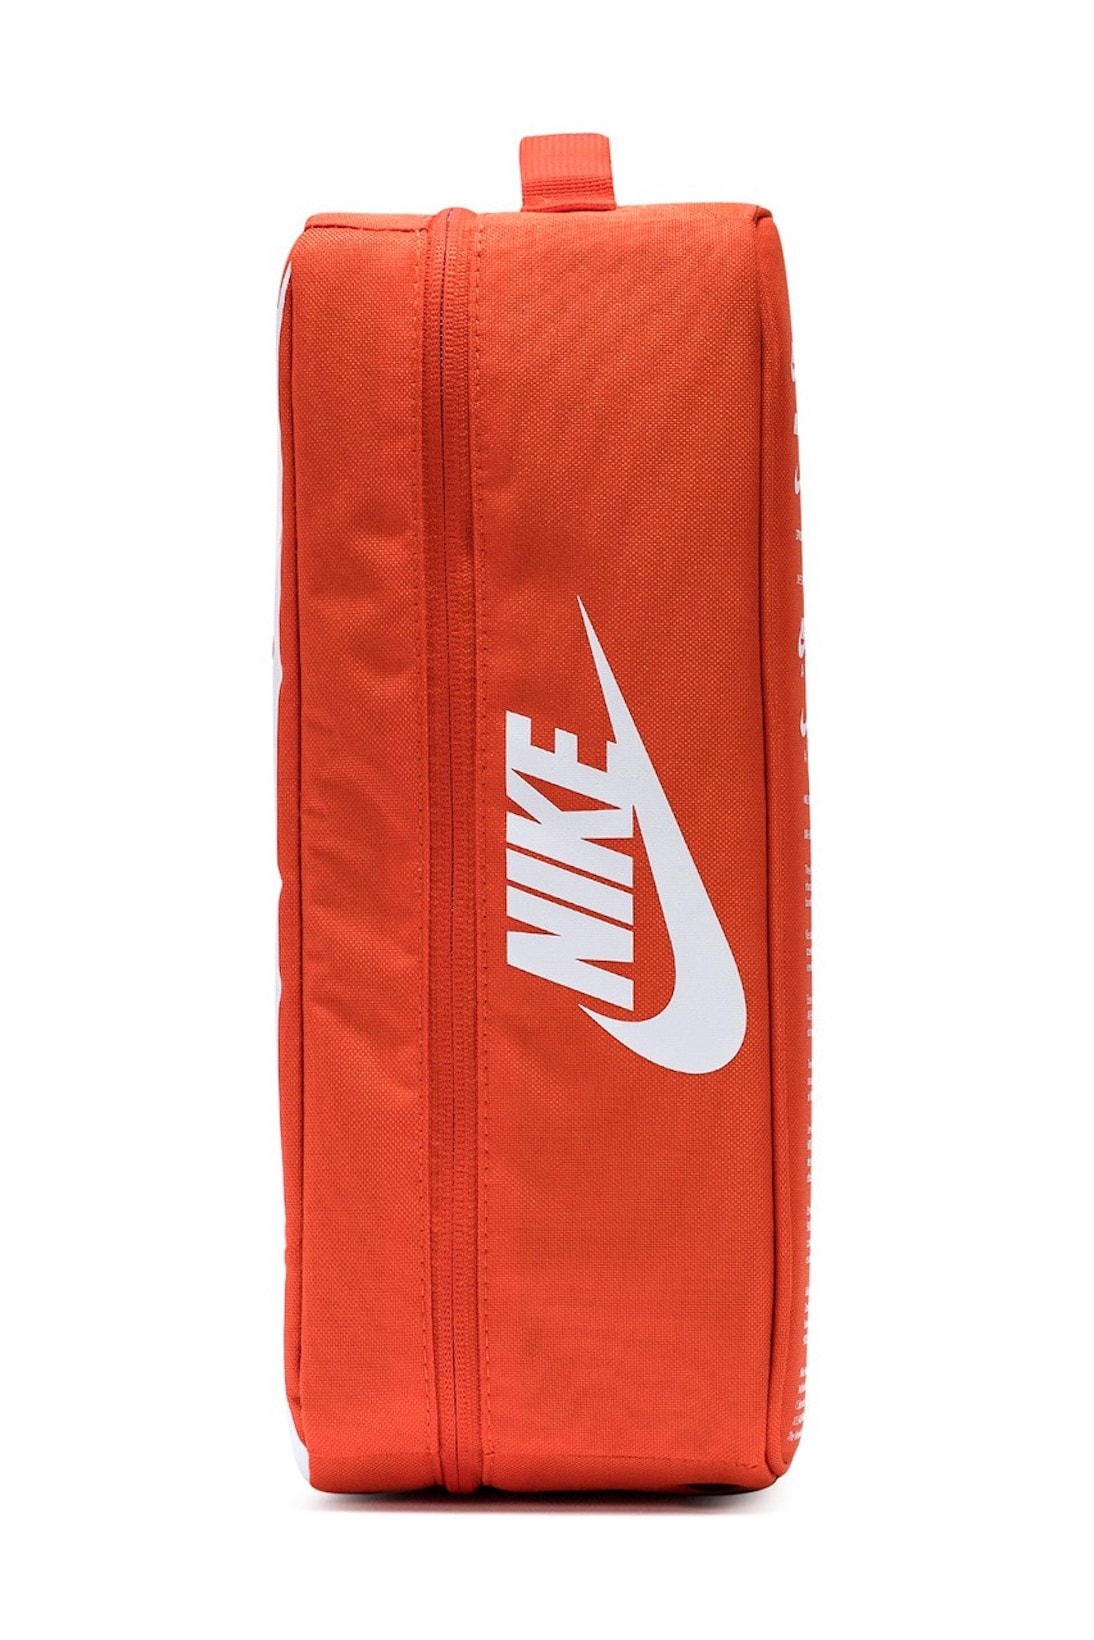 nike sportswear shoebox bag orange white side